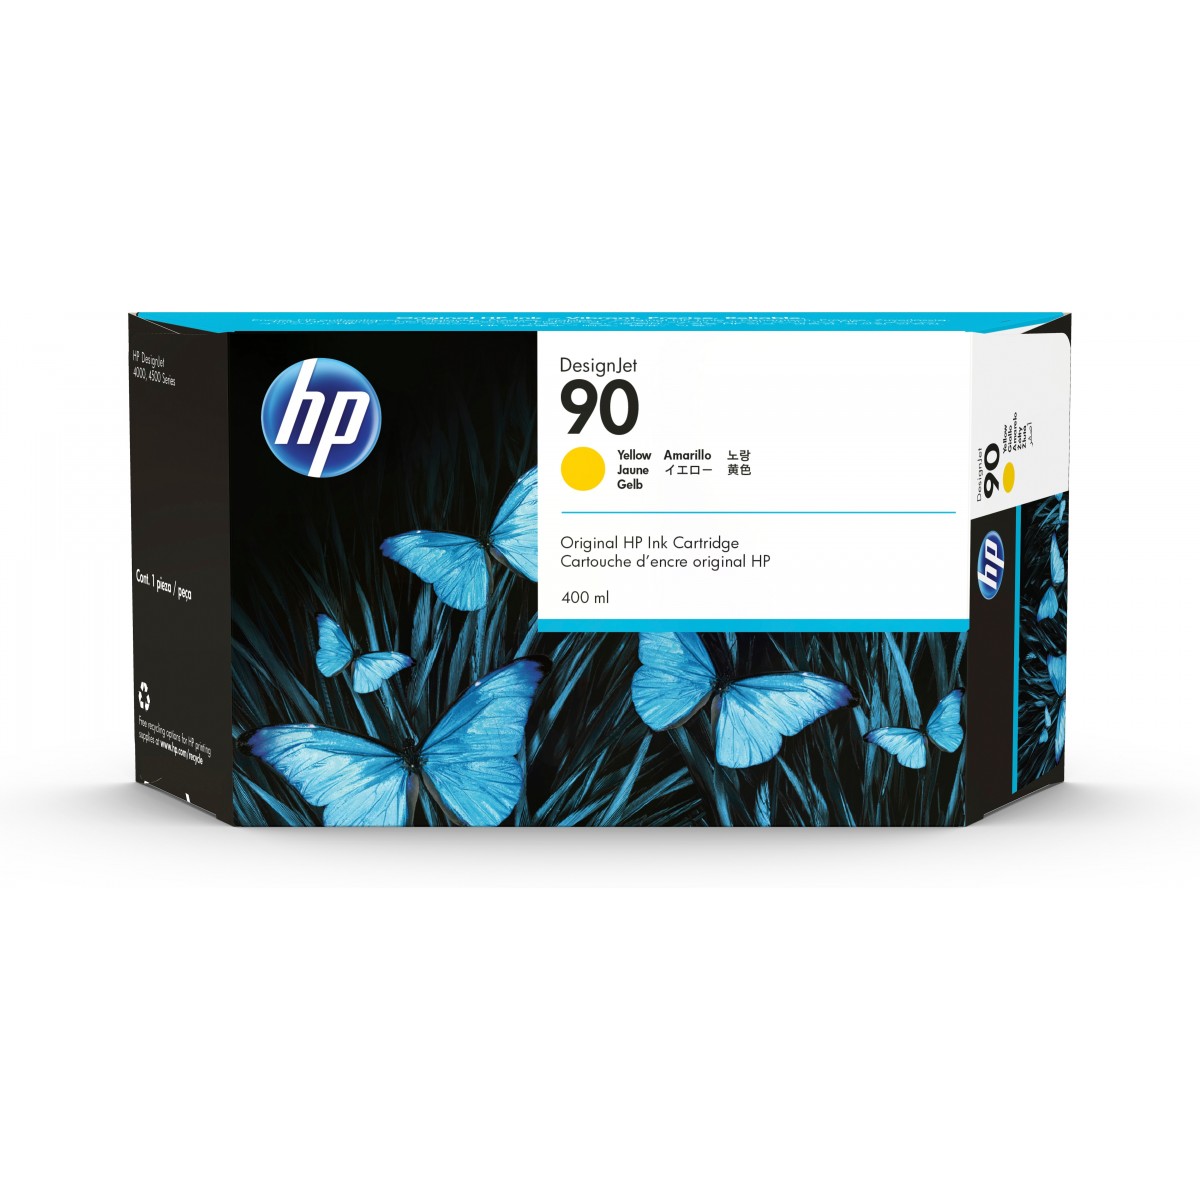 HP 90 - Original - Dye-based ink - Yellow - HP - HP Designjet 4000 - 4500 - 1 pc(s)